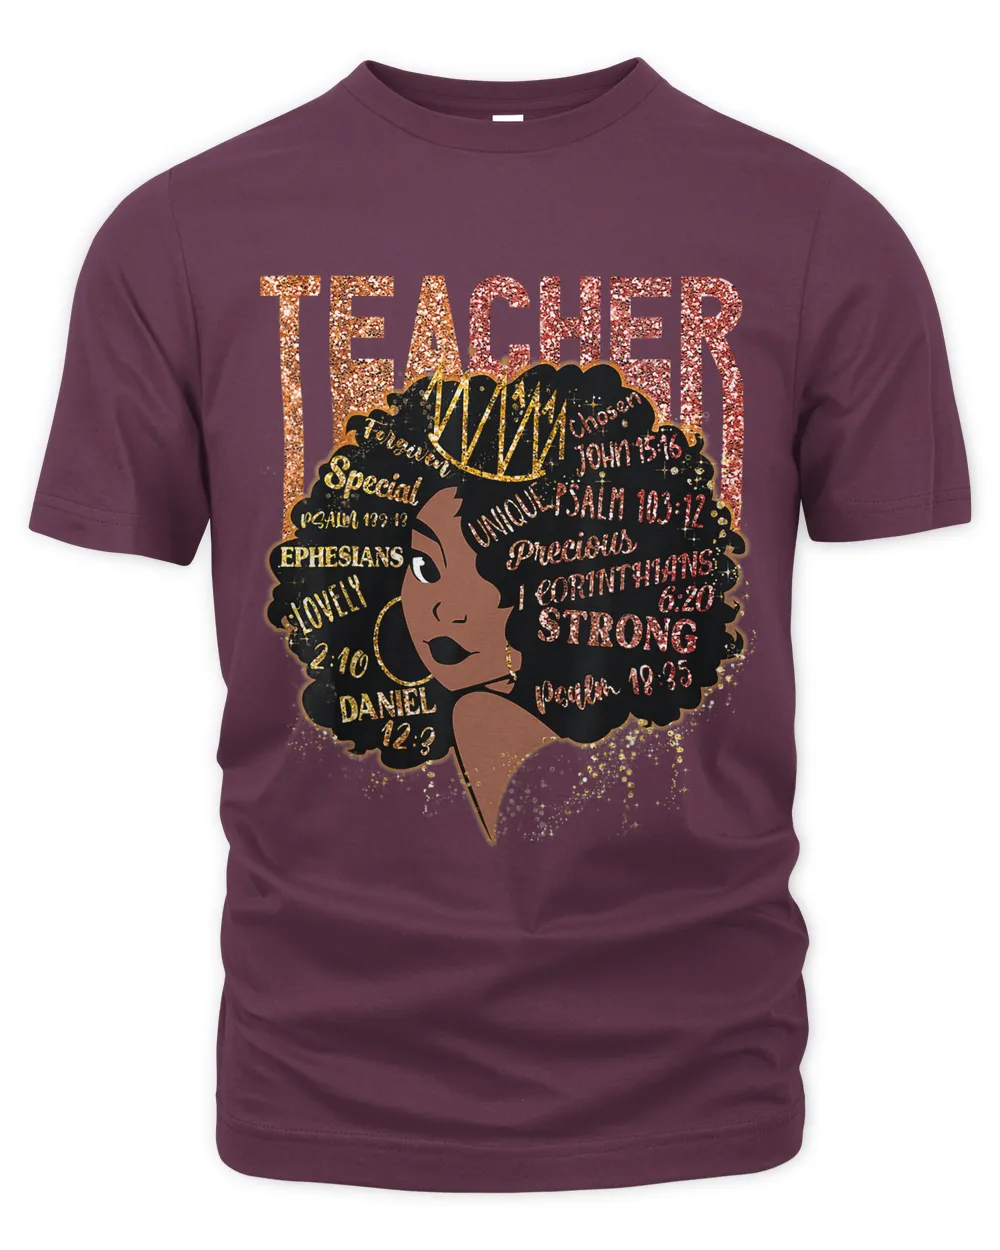 Black Woman Teacher Afro Shirt Black History Month Melanin 1